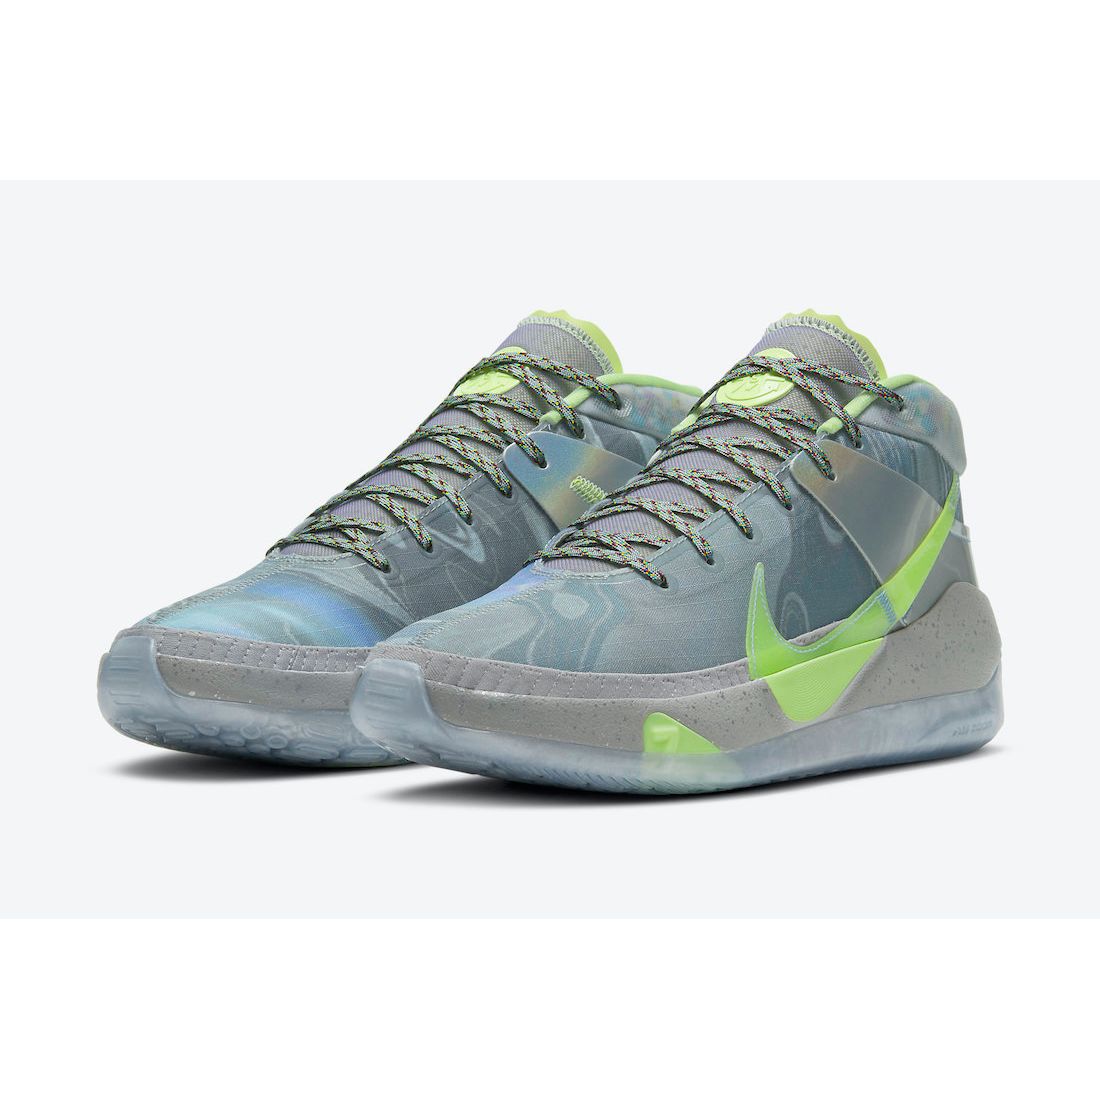 SALE - Nike Kevin Durant KD13 basketbalschoenen blauw